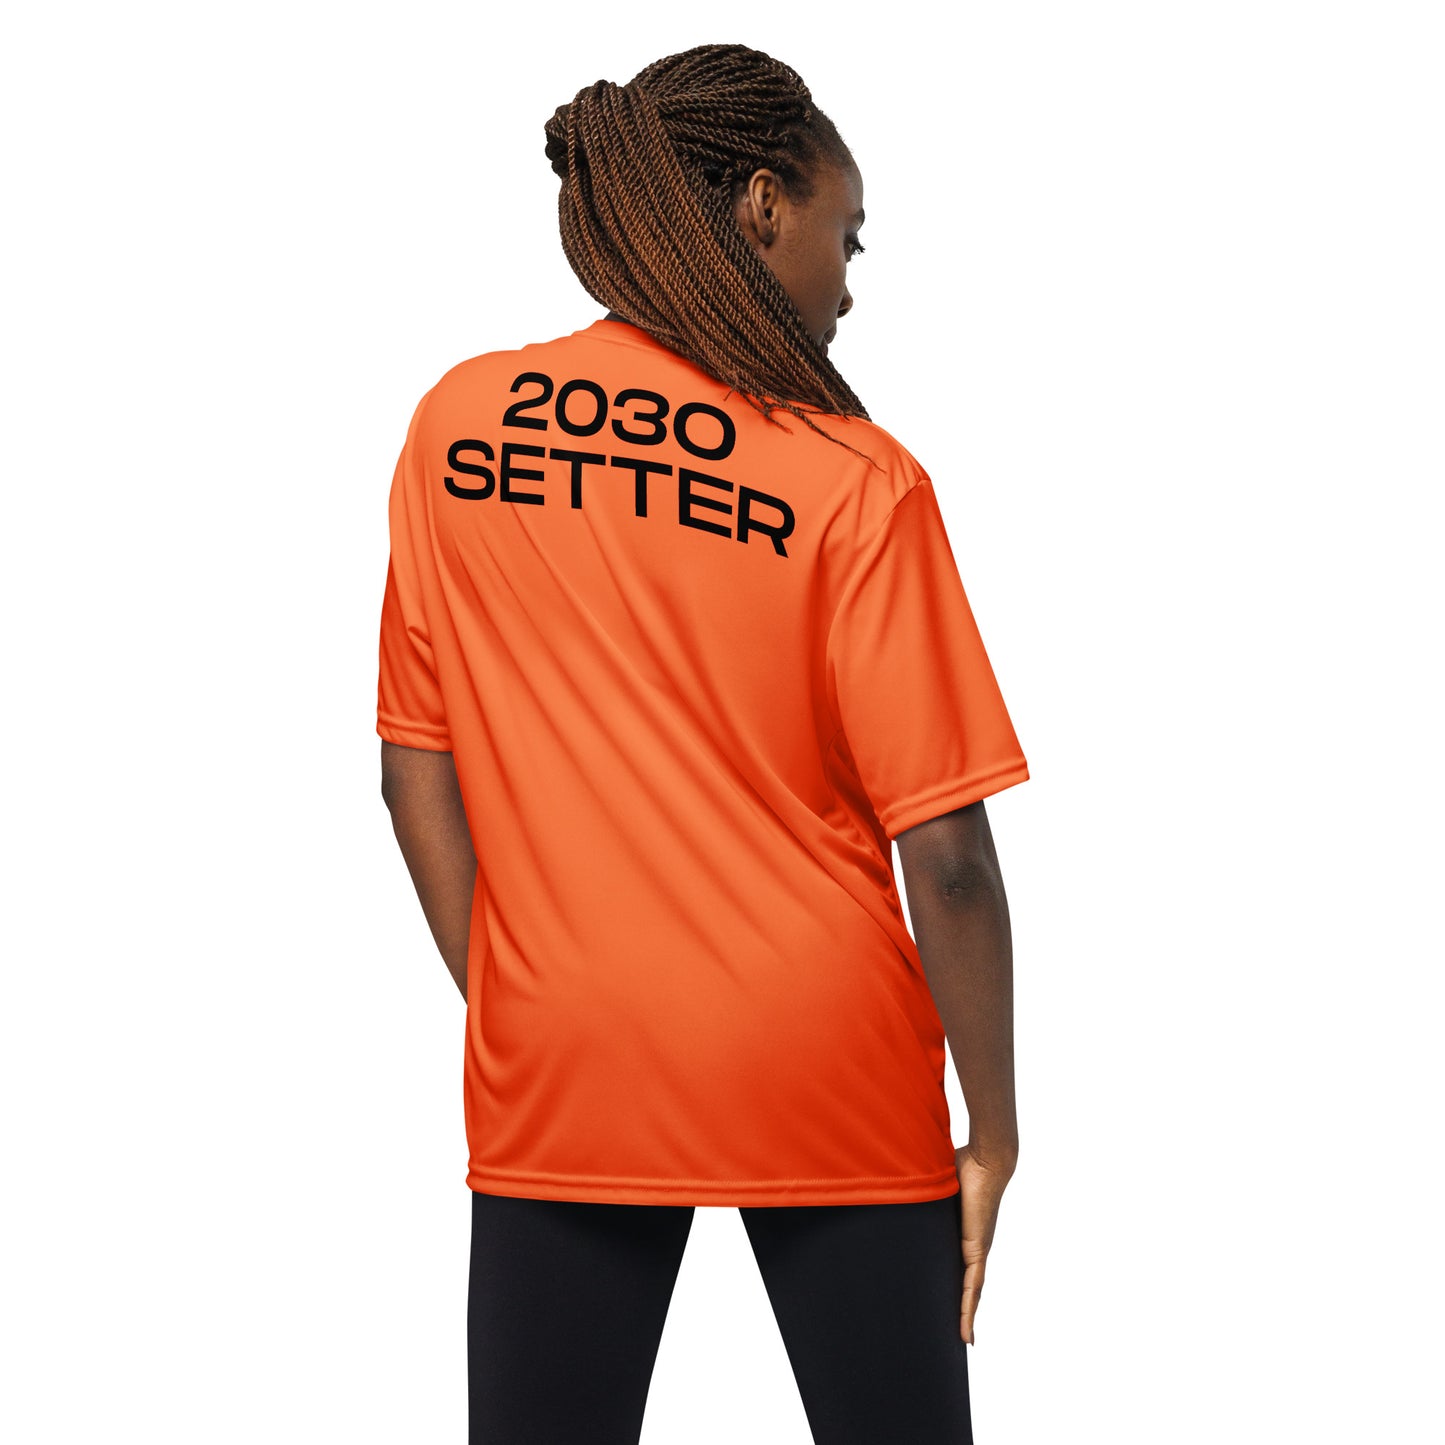 Recruit - 2030 Setter - Unisex performance crew neck t-shirt